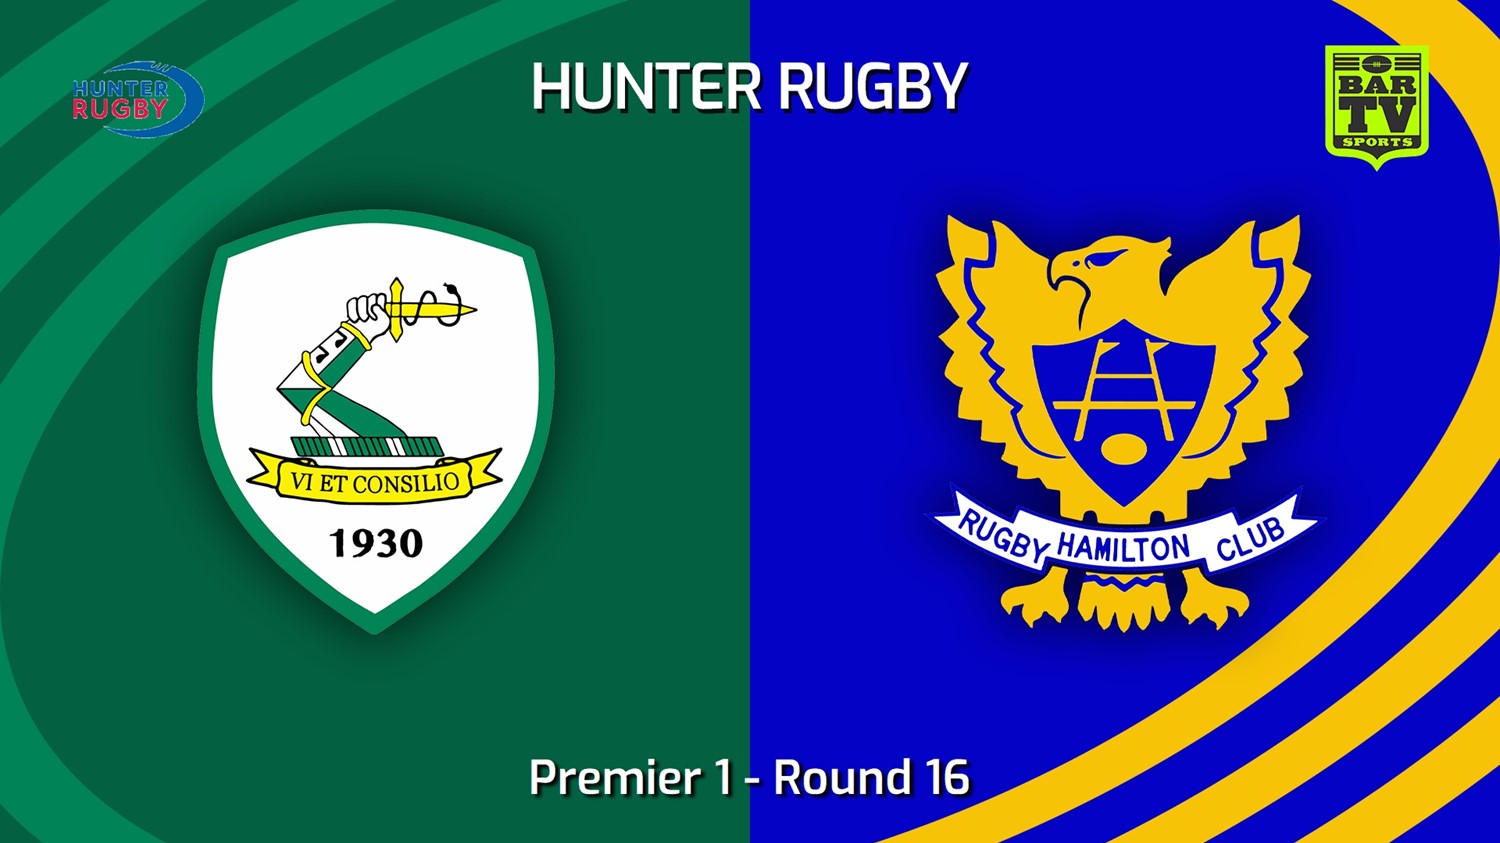 230805-Hunter Rugby Round 16 - Premier 1 - Merewether Carlton v Hamilton Hawks Minigame Slate Image